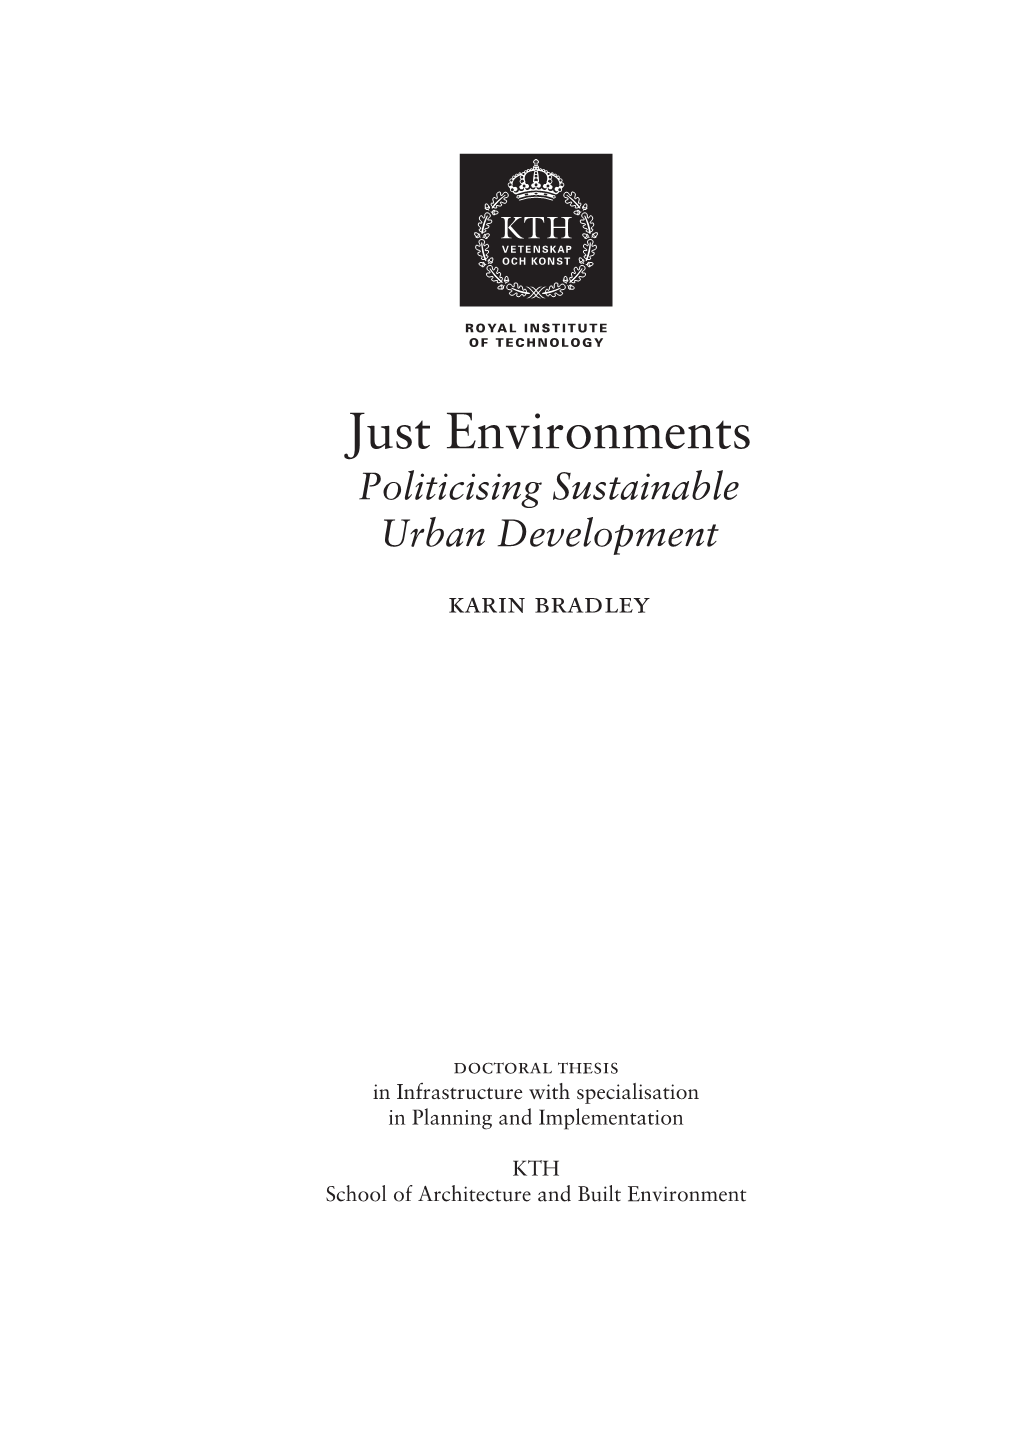 Just Environments Politicising Sustainable Urban Development